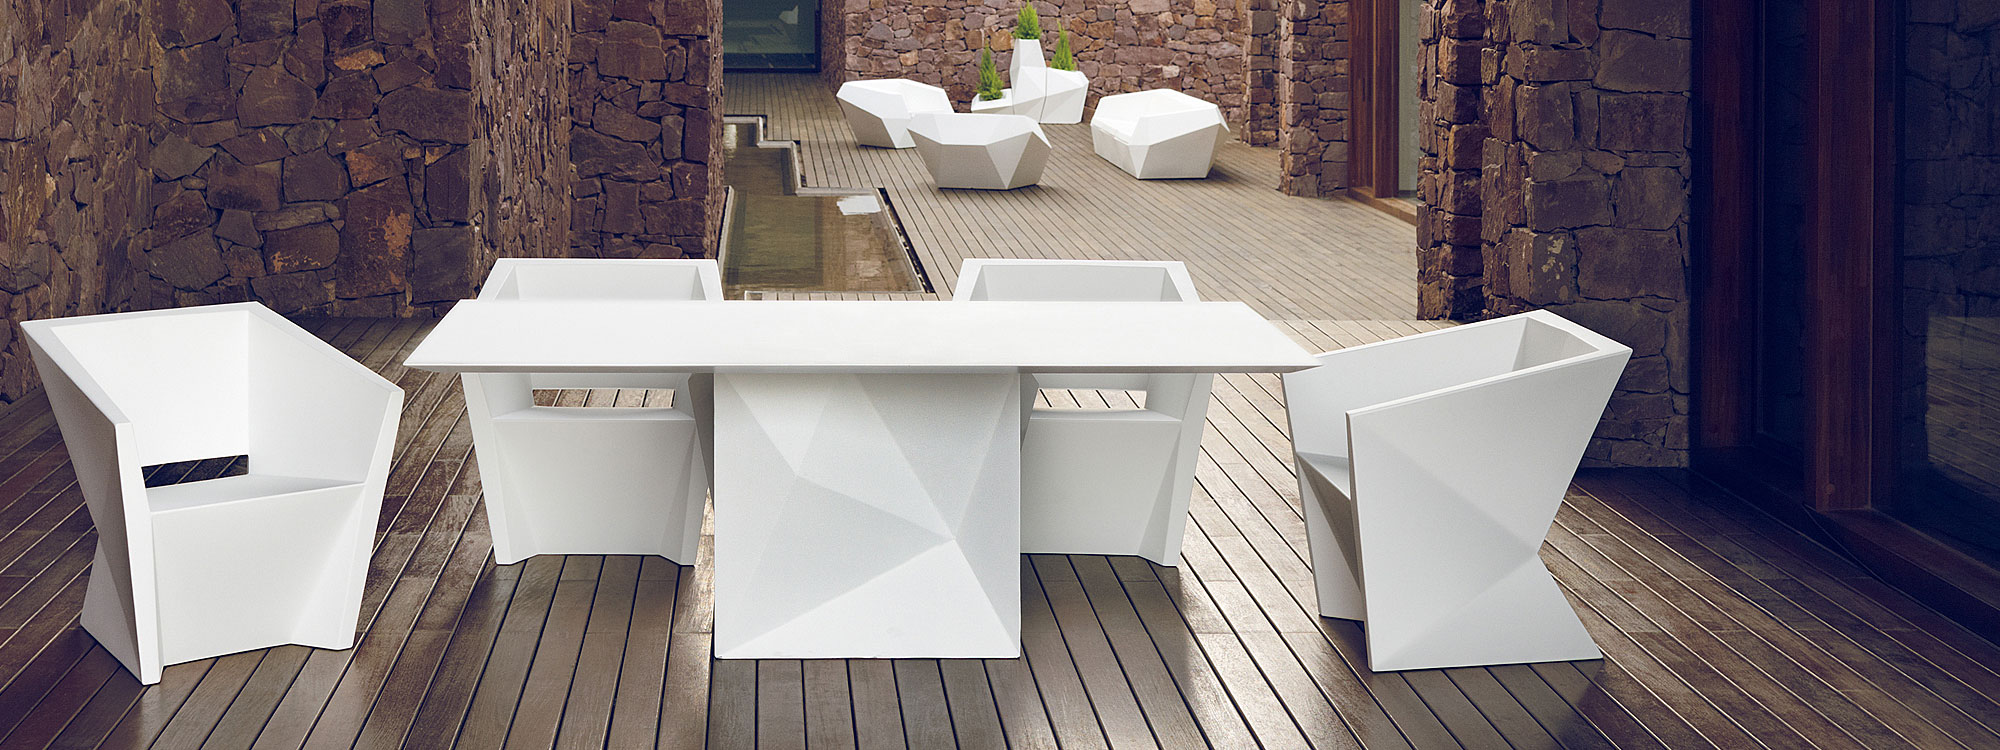 Image of Vondom Faz modern white garden dining furniture in peaceful courtyard terrace